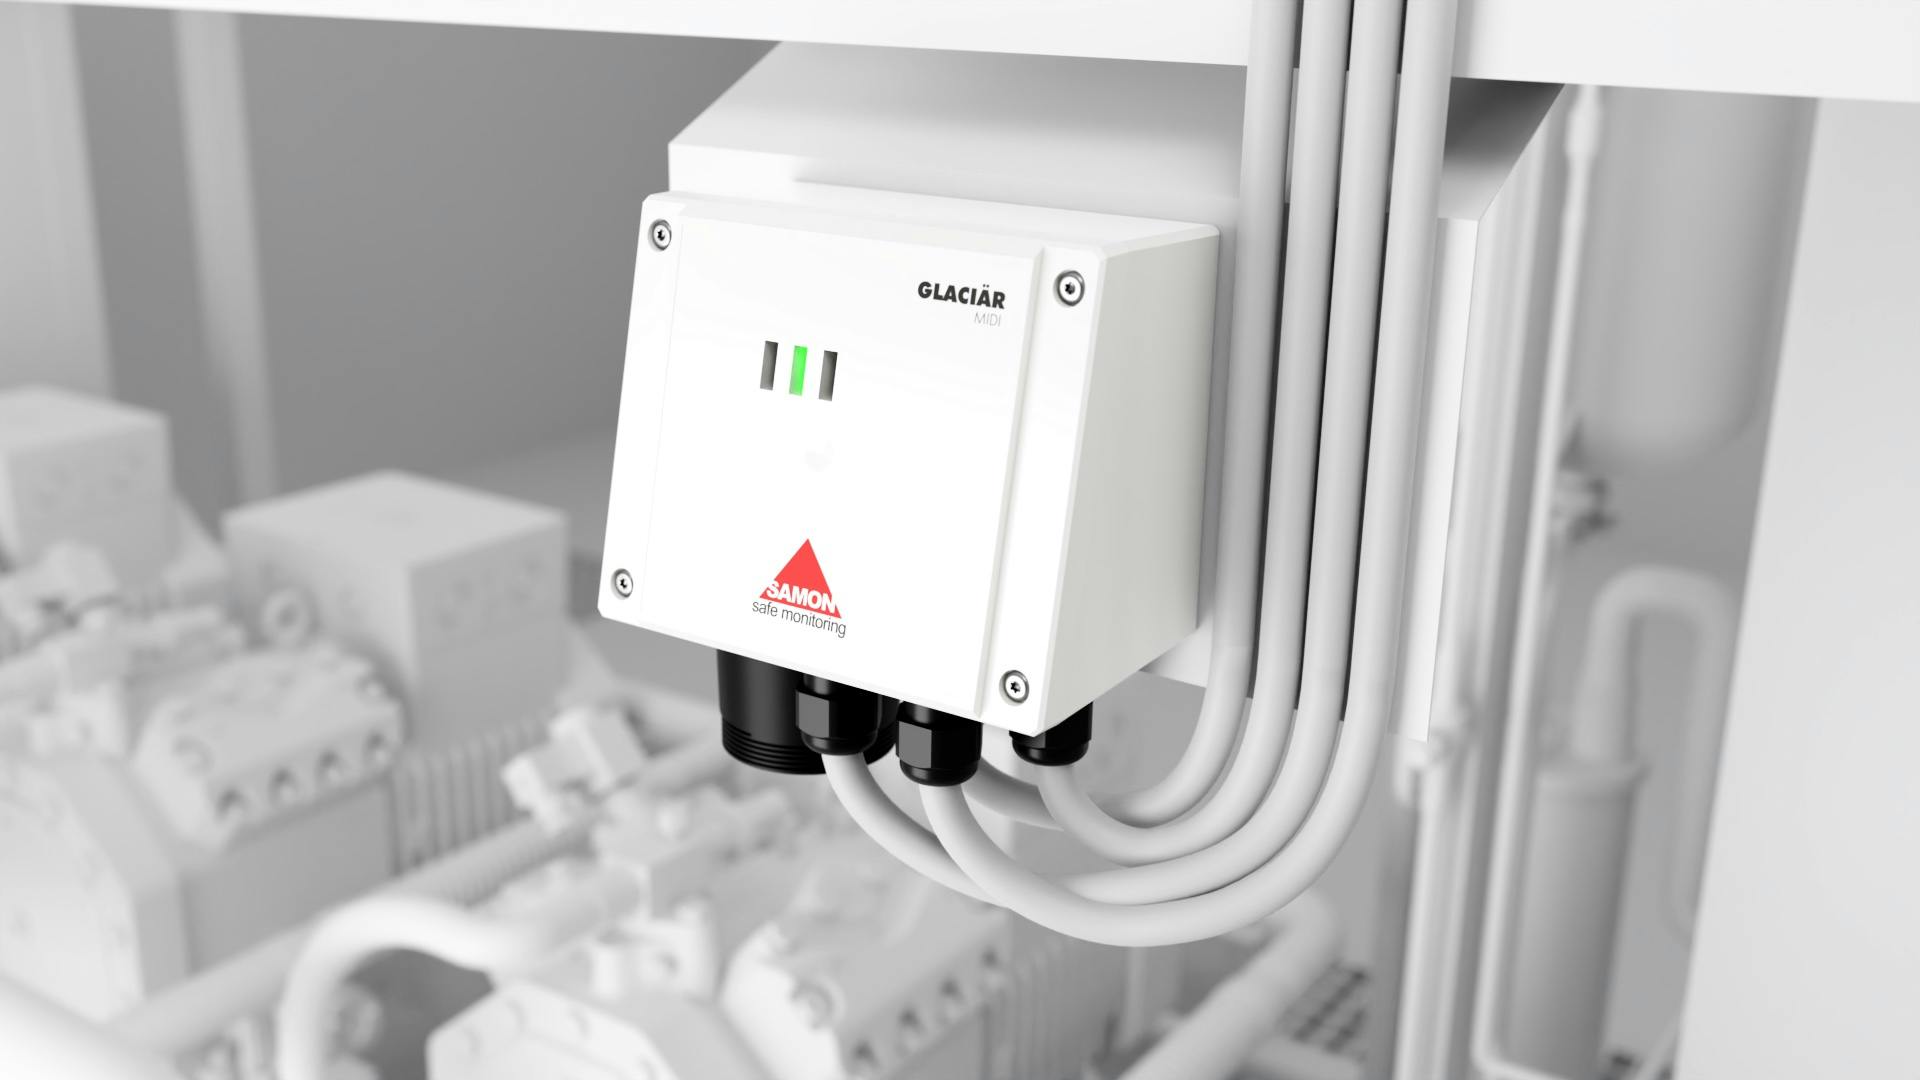 SAMON introduces new GLACIÄR MIDI refrigerant gas detector